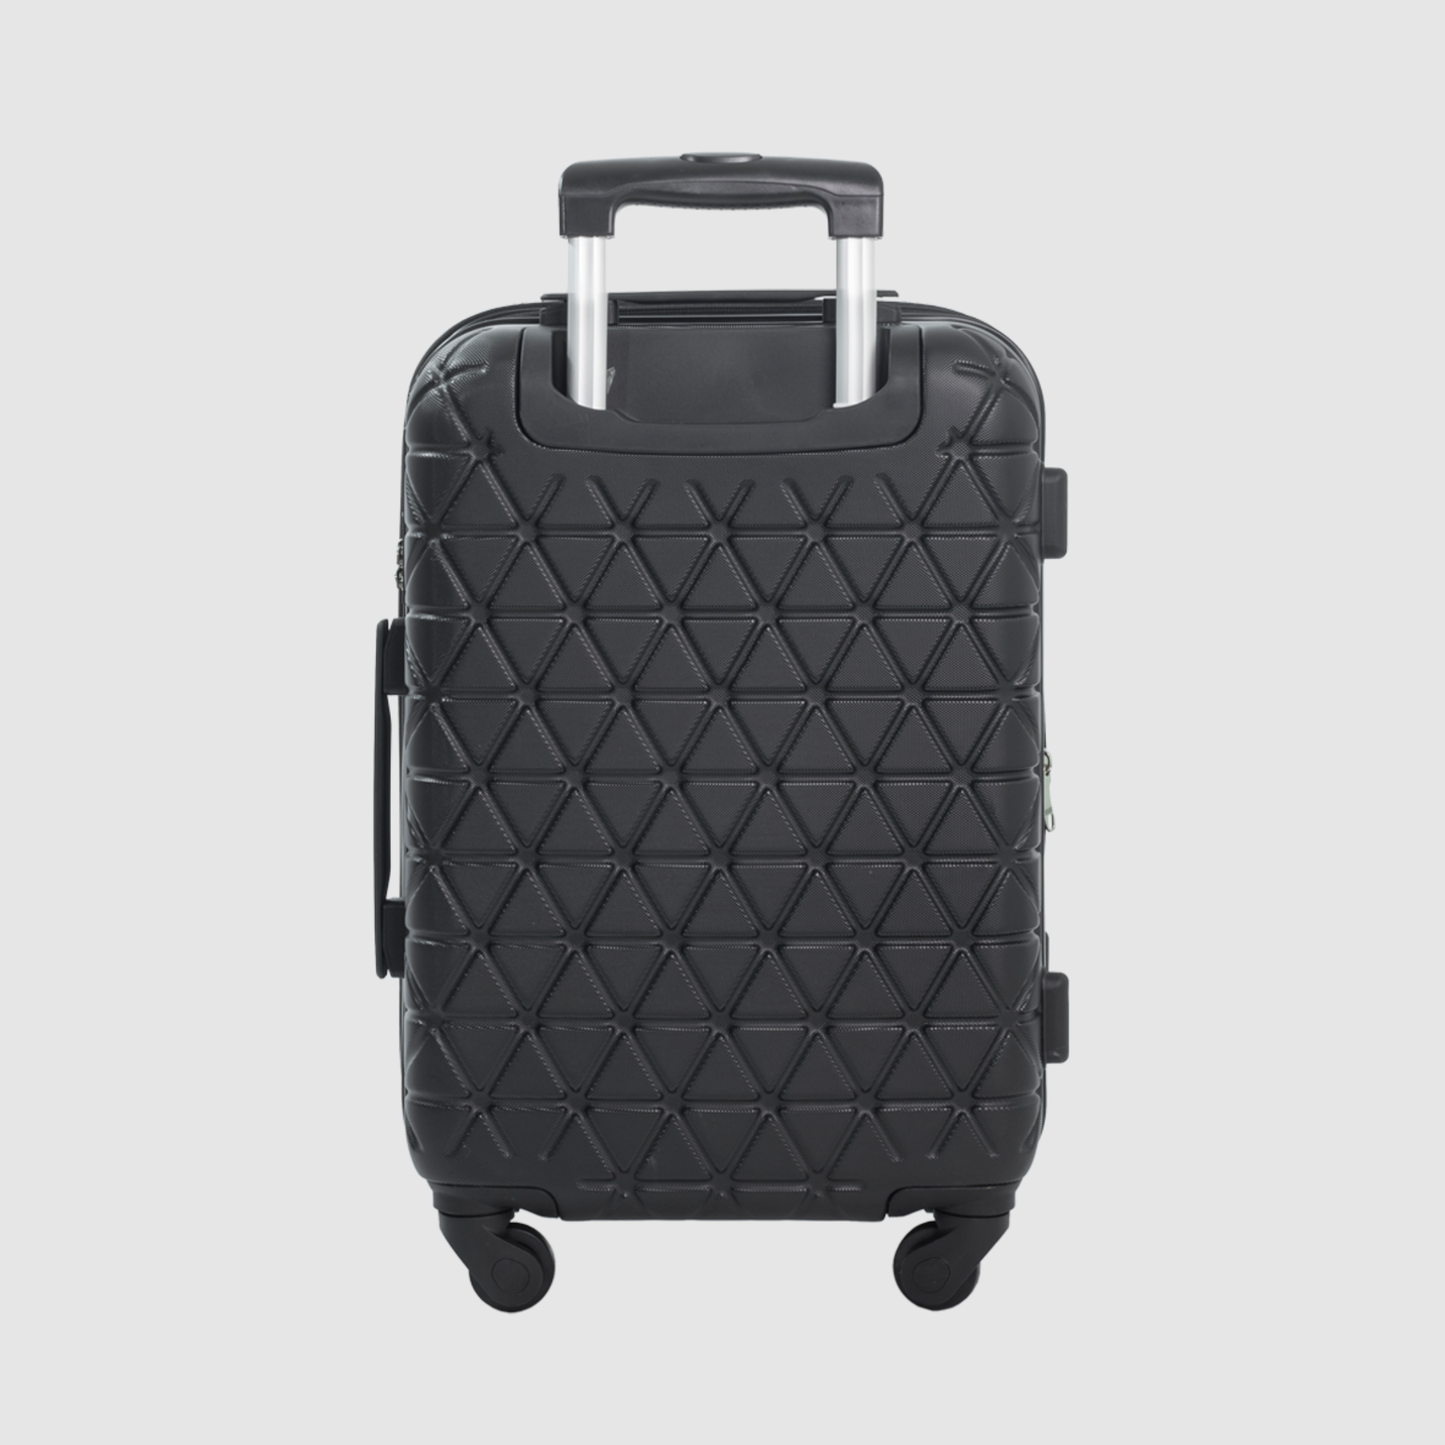 Onyx Black Paragon Small Suitcase